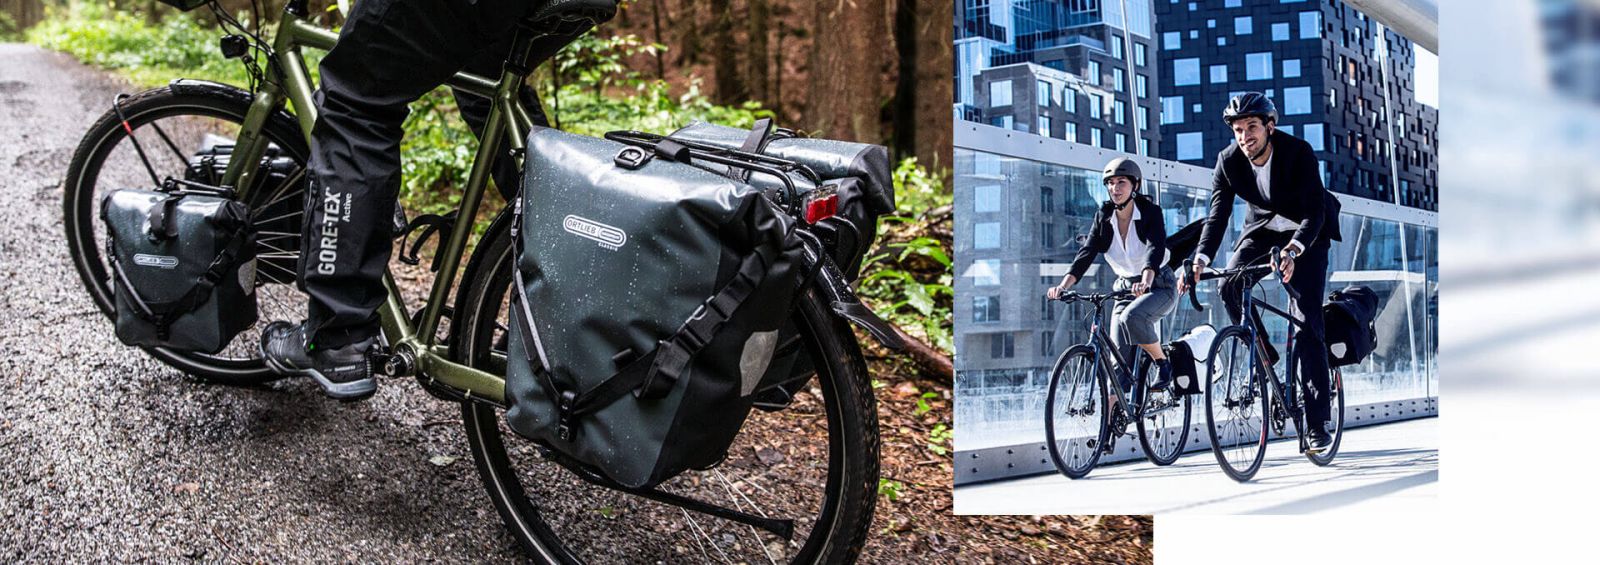 Huntvp Bike Pannier Bike Bag Bicycle Rear Rack Bag Waterproof 3 in 1 Cycling Multi Function Rear Seat Bag with Rain Cover 